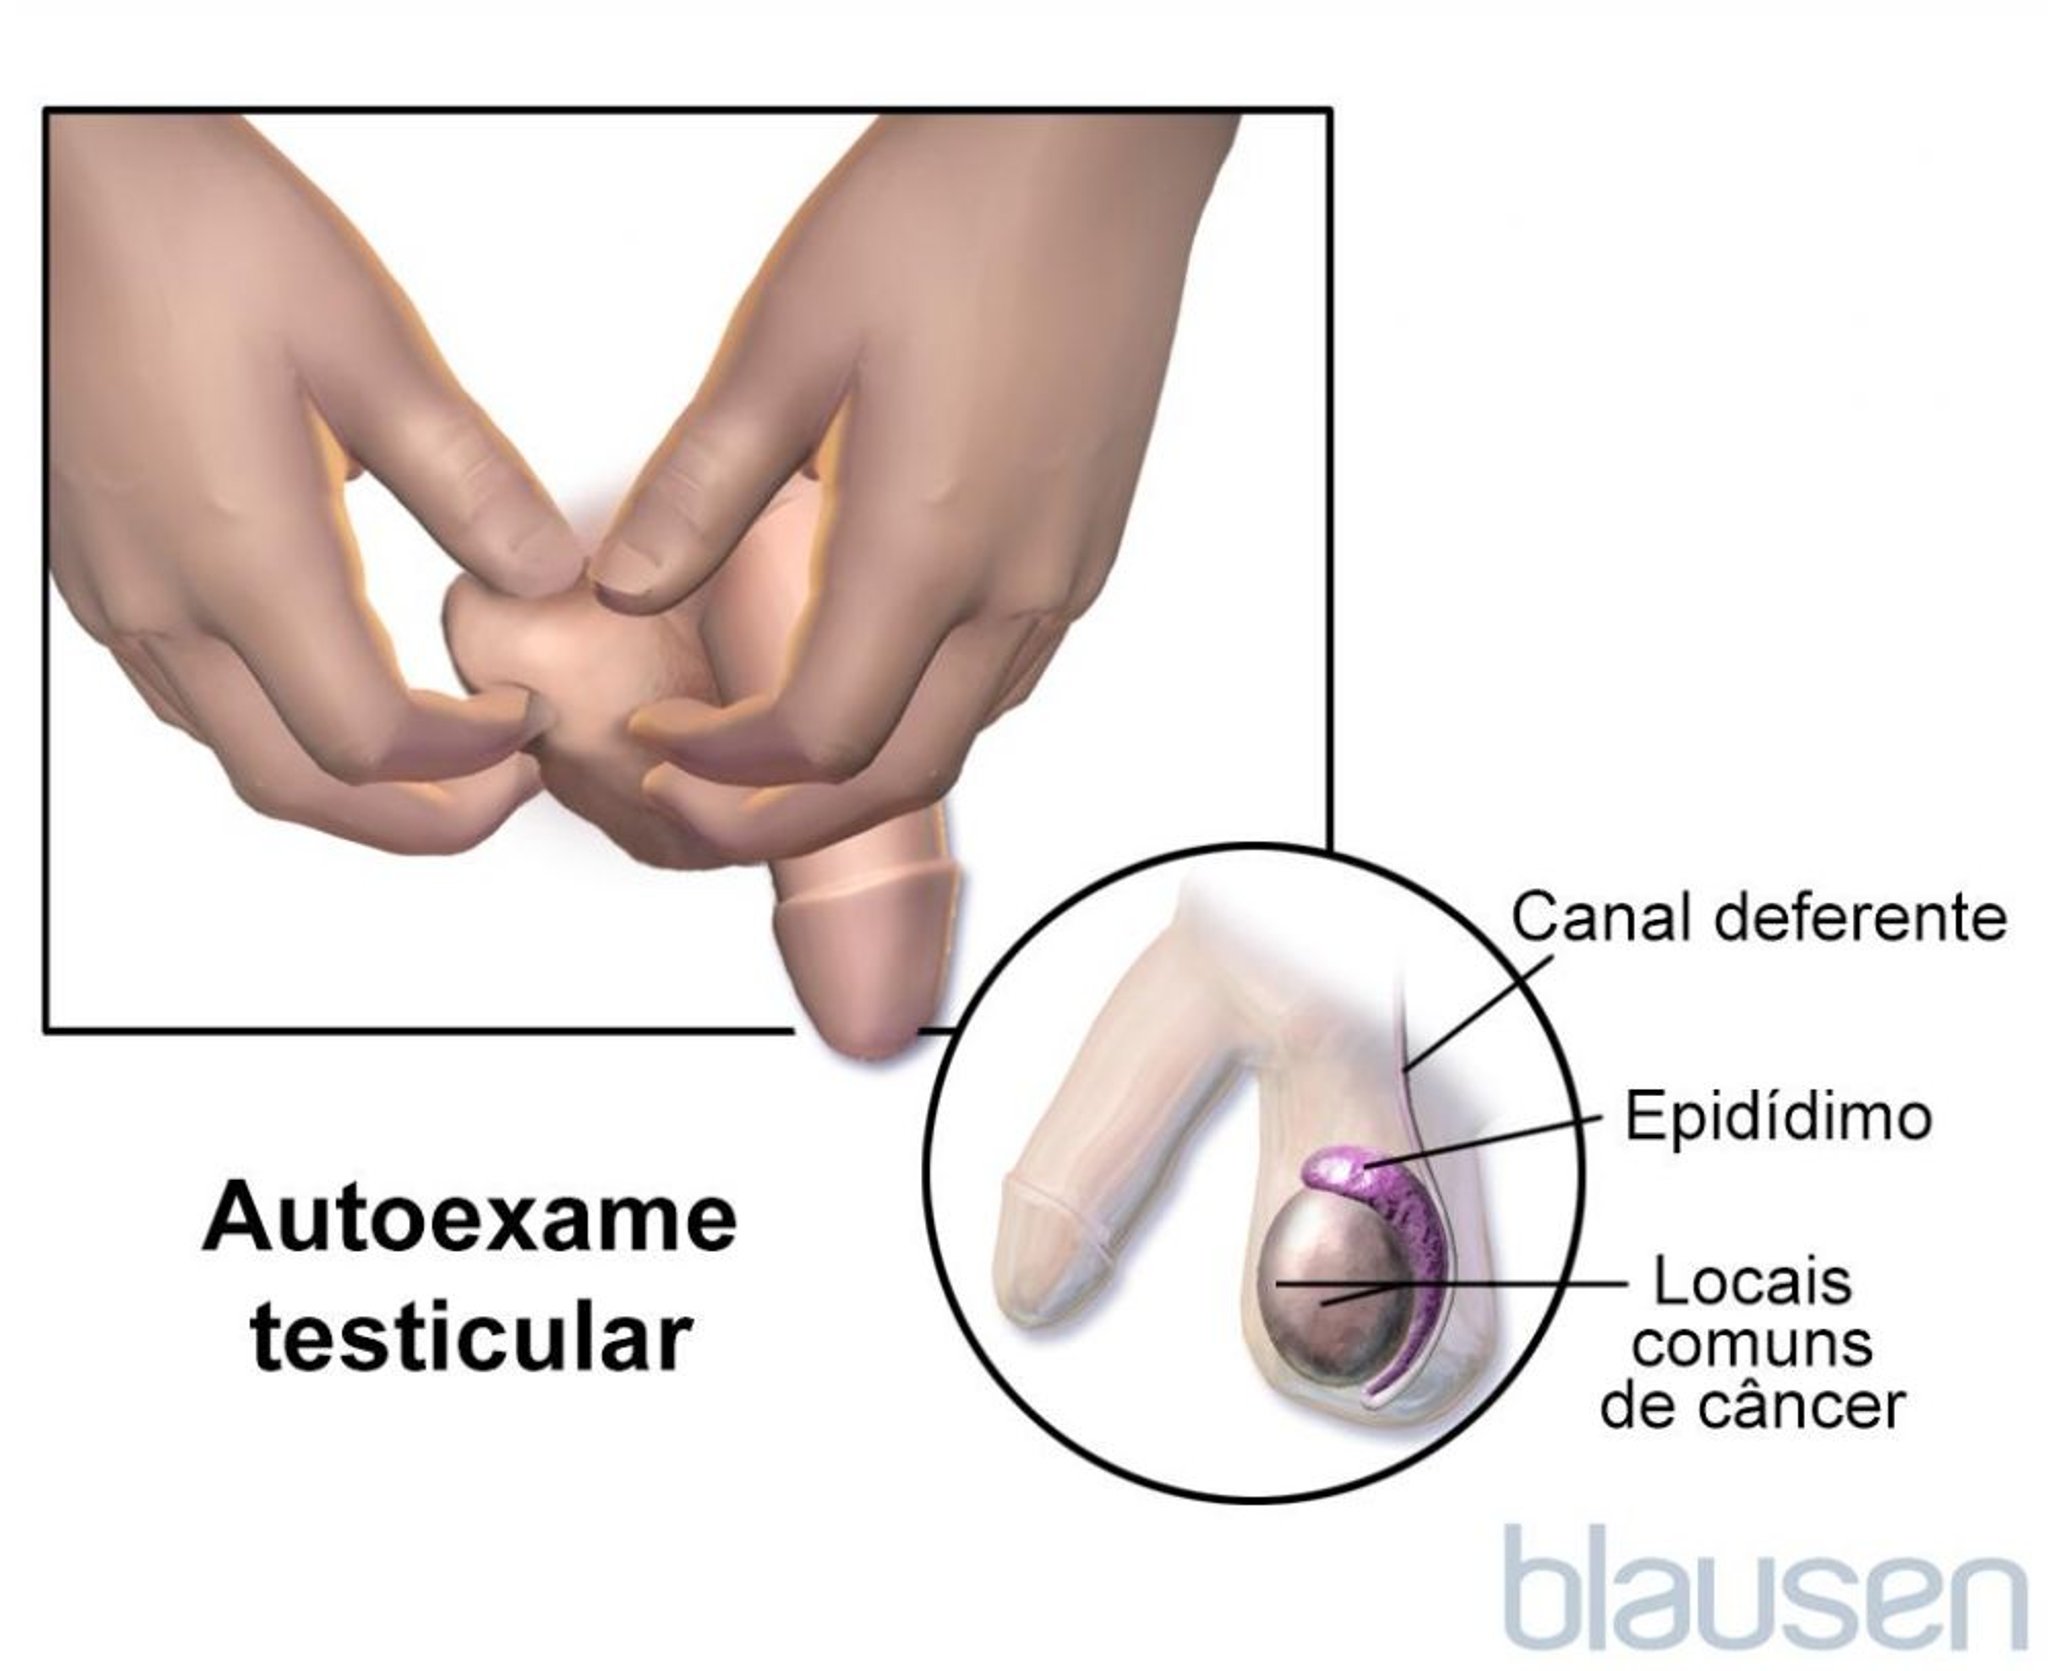 Autoexame testicular